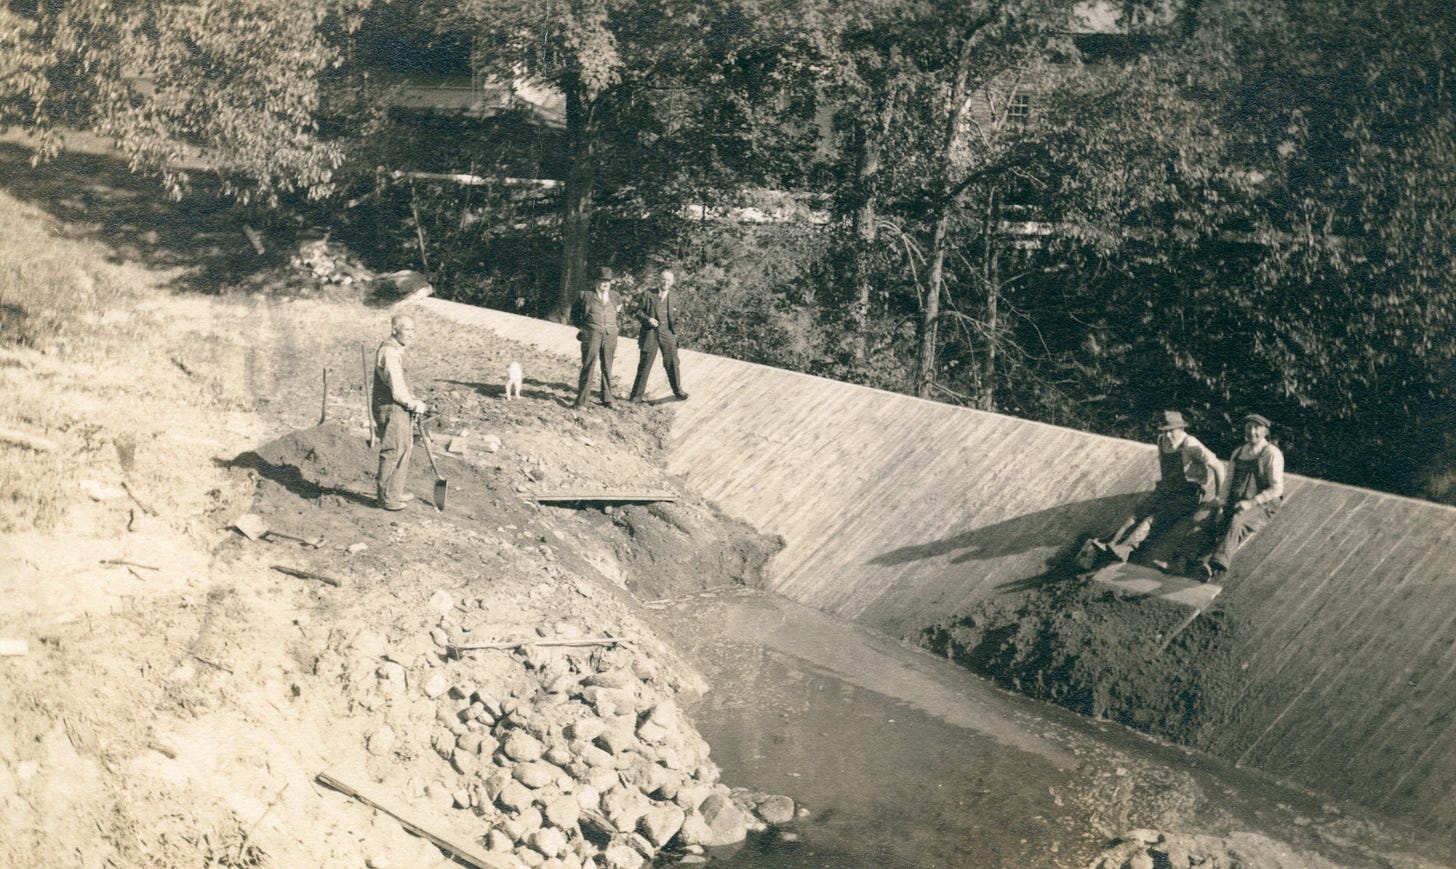 Repairing the dam